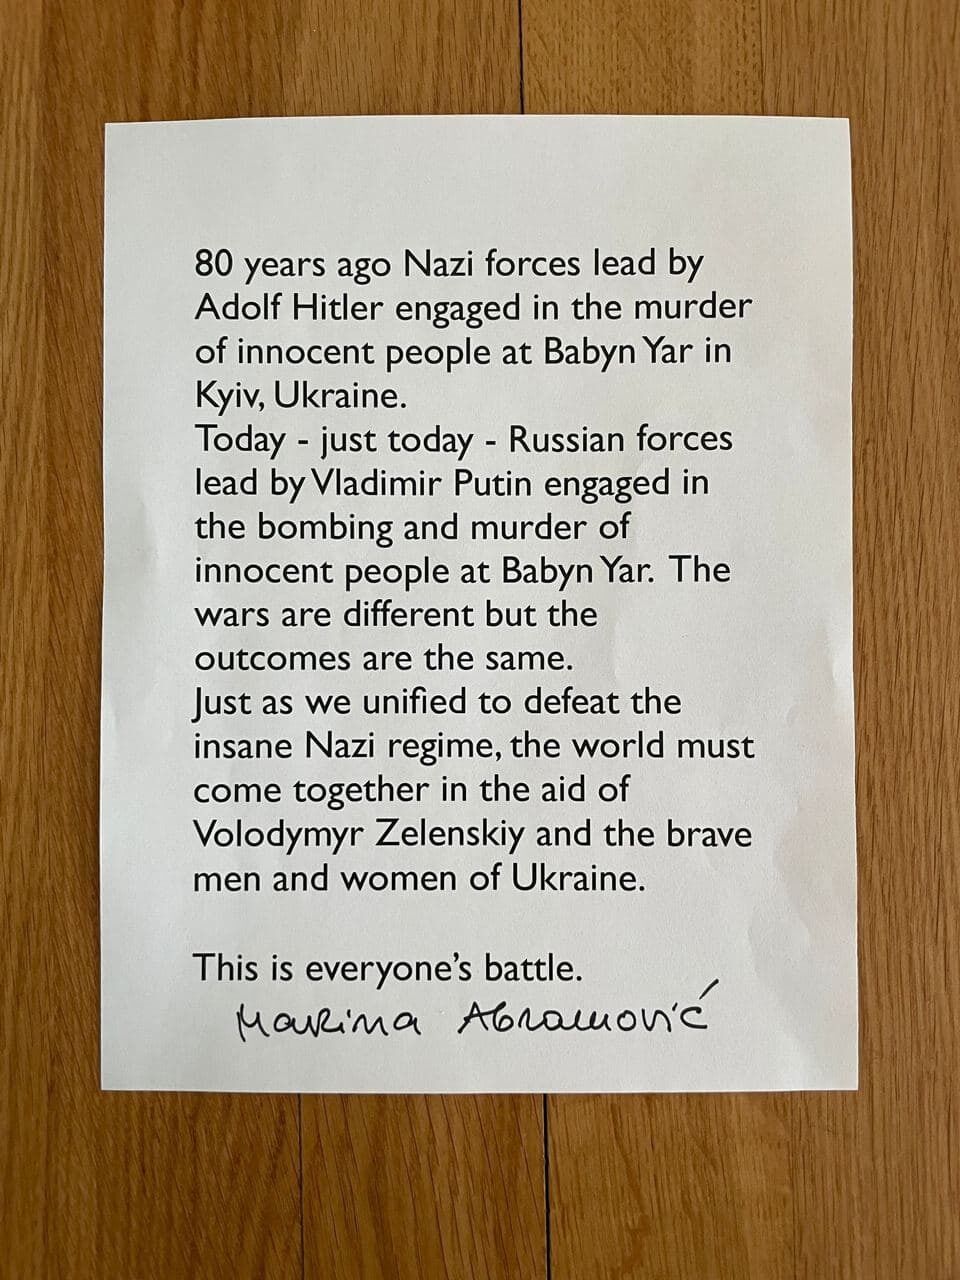 Письмо от Марины Абрамович